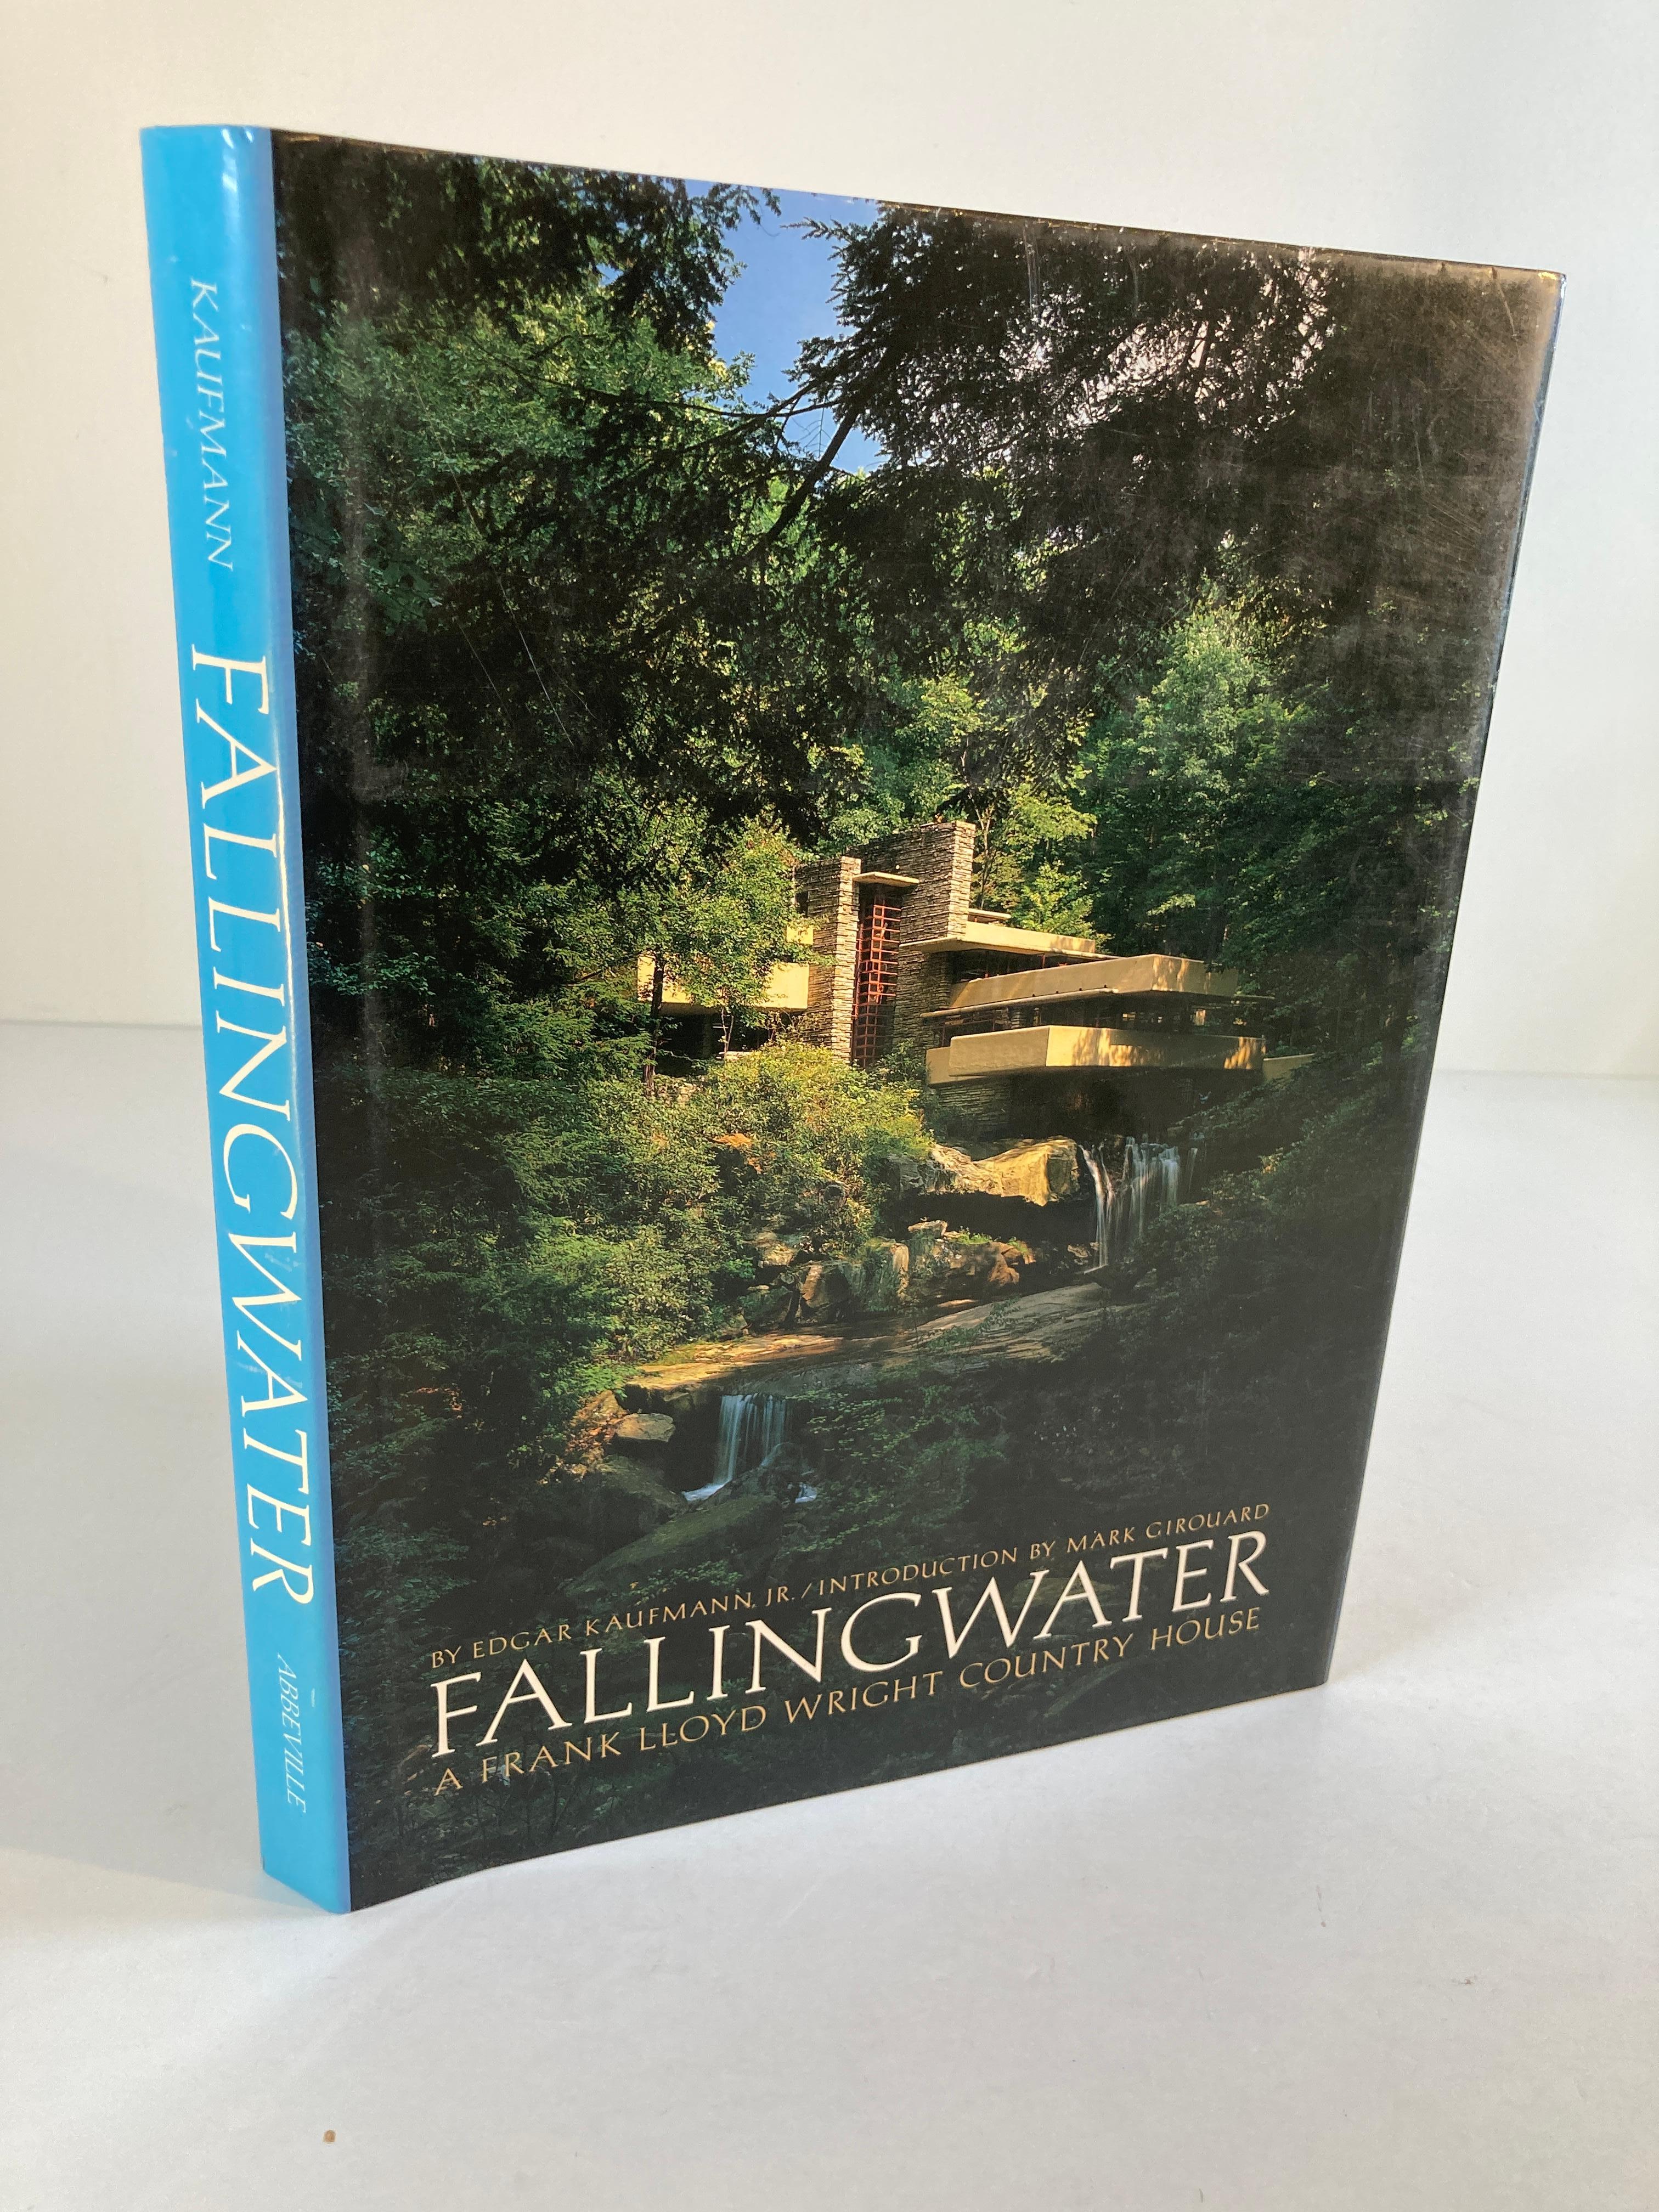 Fallingwater, A Frank lloyd Wright Country House, Edgar K. Kaufmann, 1986
